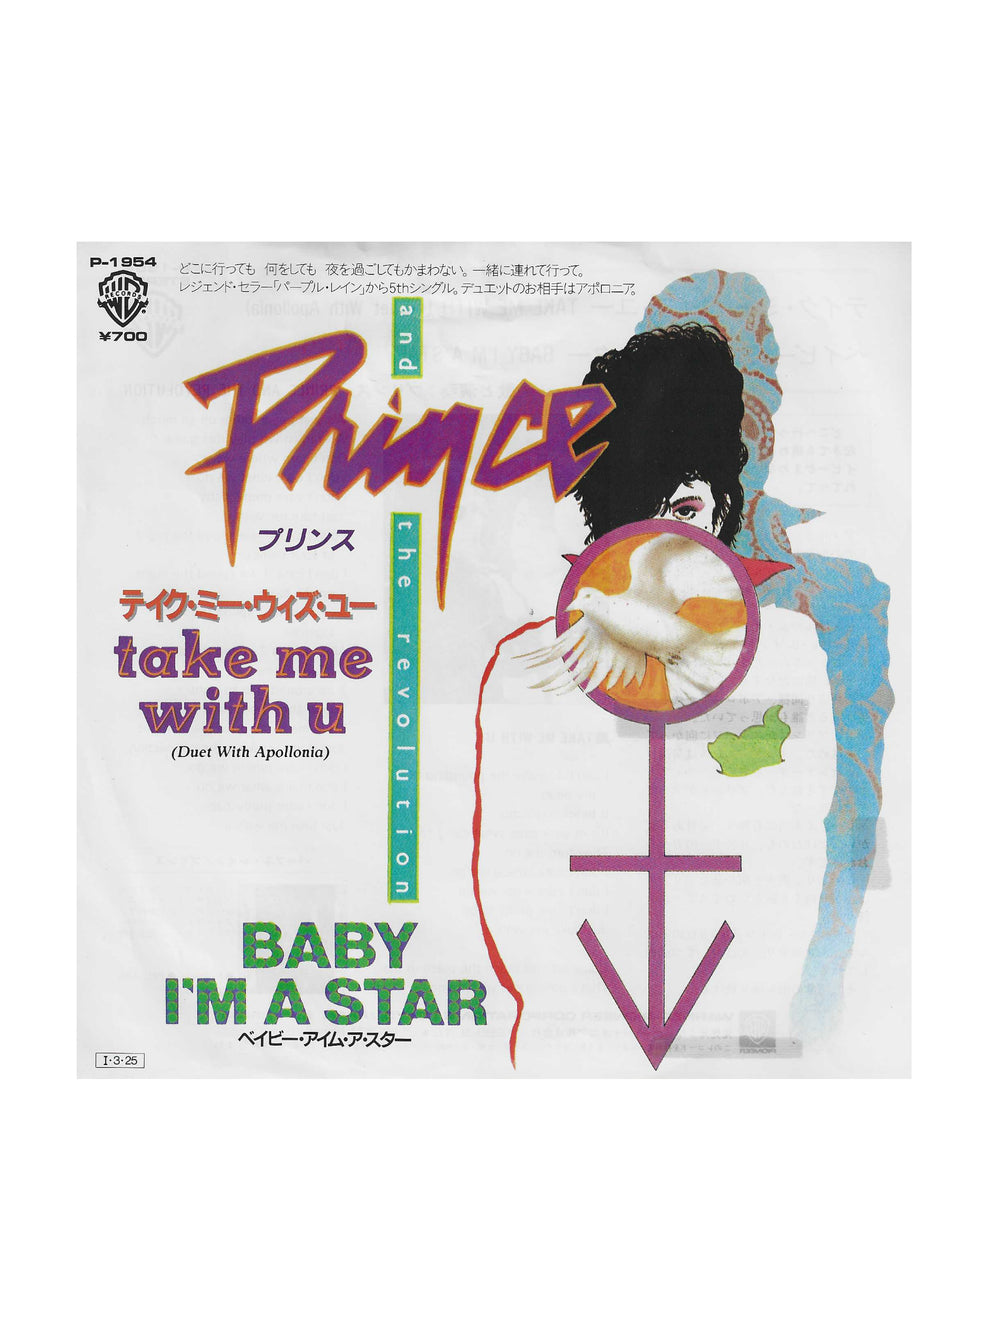 Prince – & The Revolution Take Me With U 7 Inch Vinyl Single 1984 Original Japan PROMO